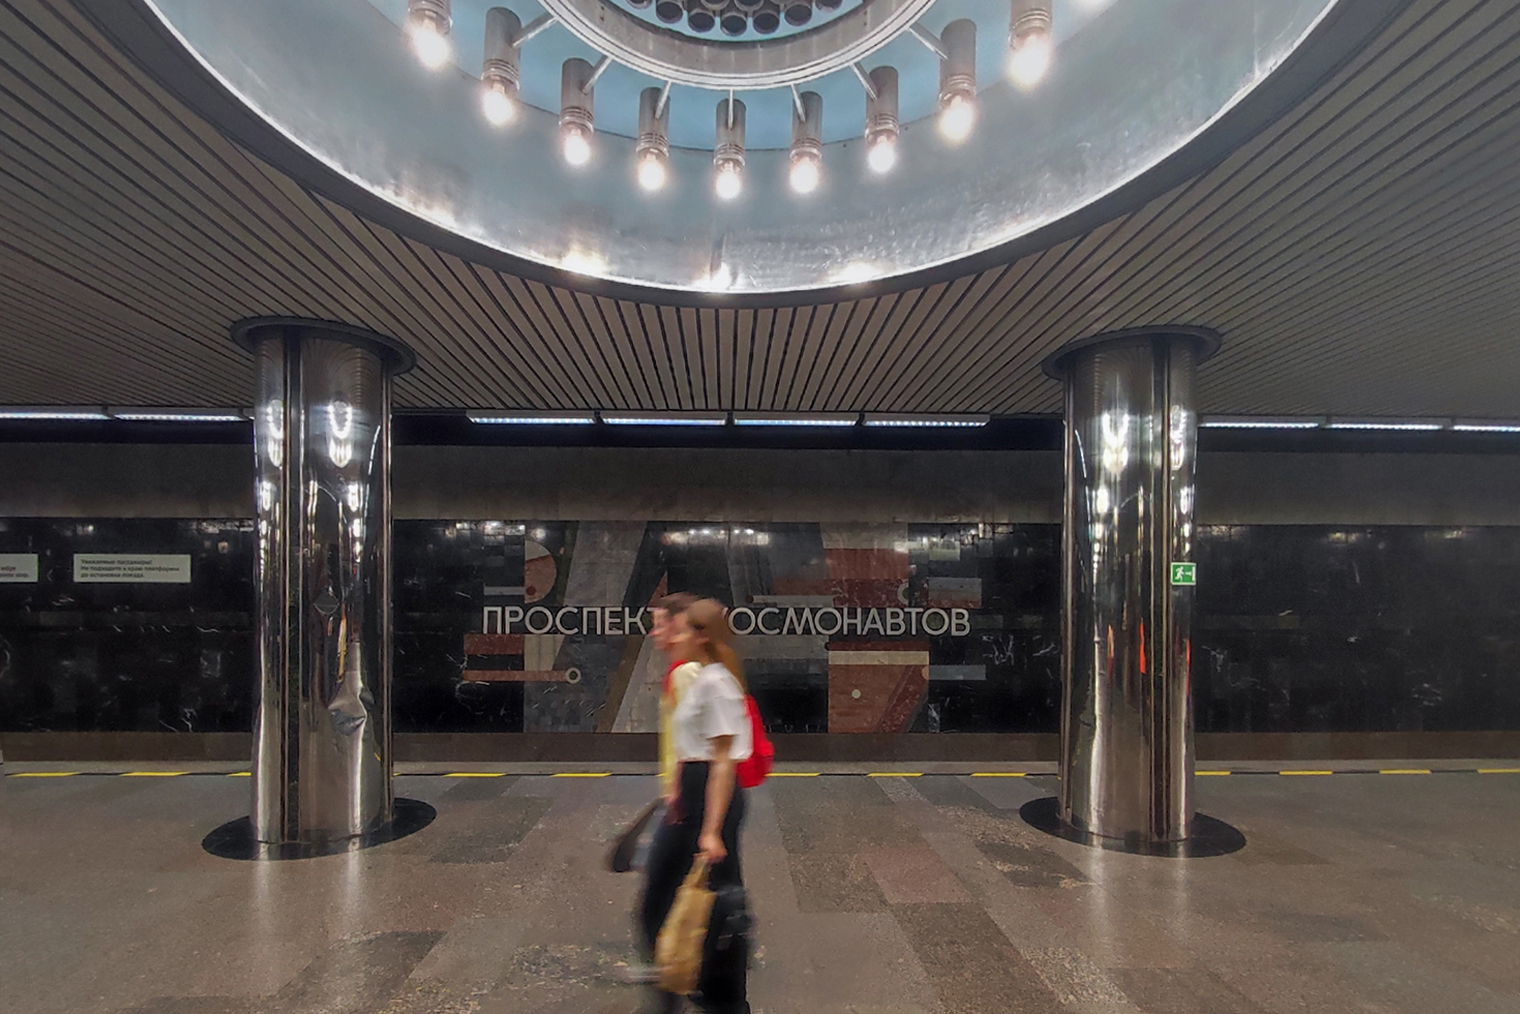 Светильники на станции метро «Проспект Космонавтов» похожи на двигатели ракет